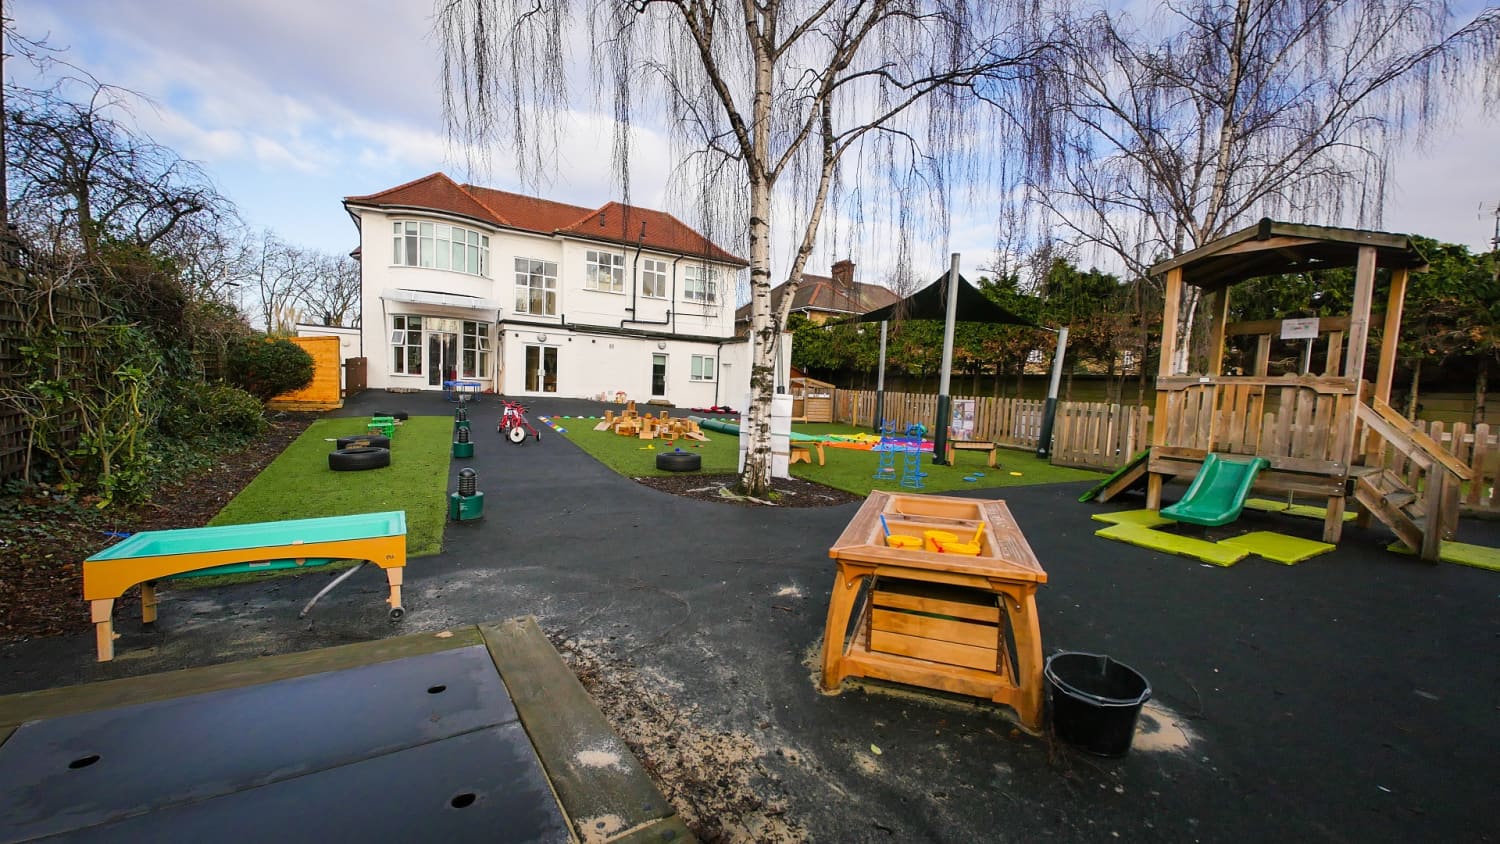 Chestnut Nursery Schools Introductory Image - Arden House